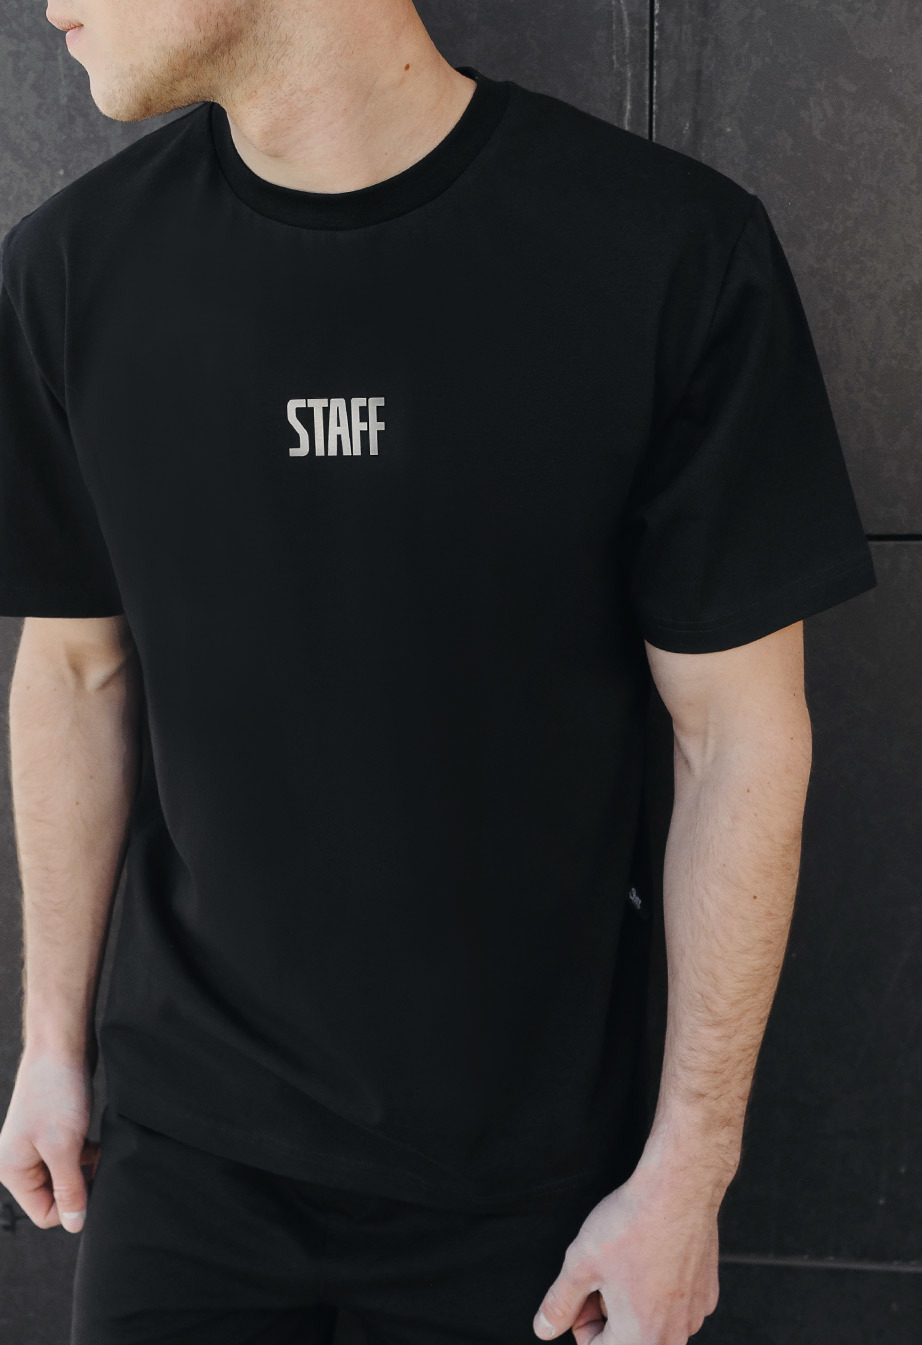 Letni komplet: koszulka + szorty Staff sp reflective logo